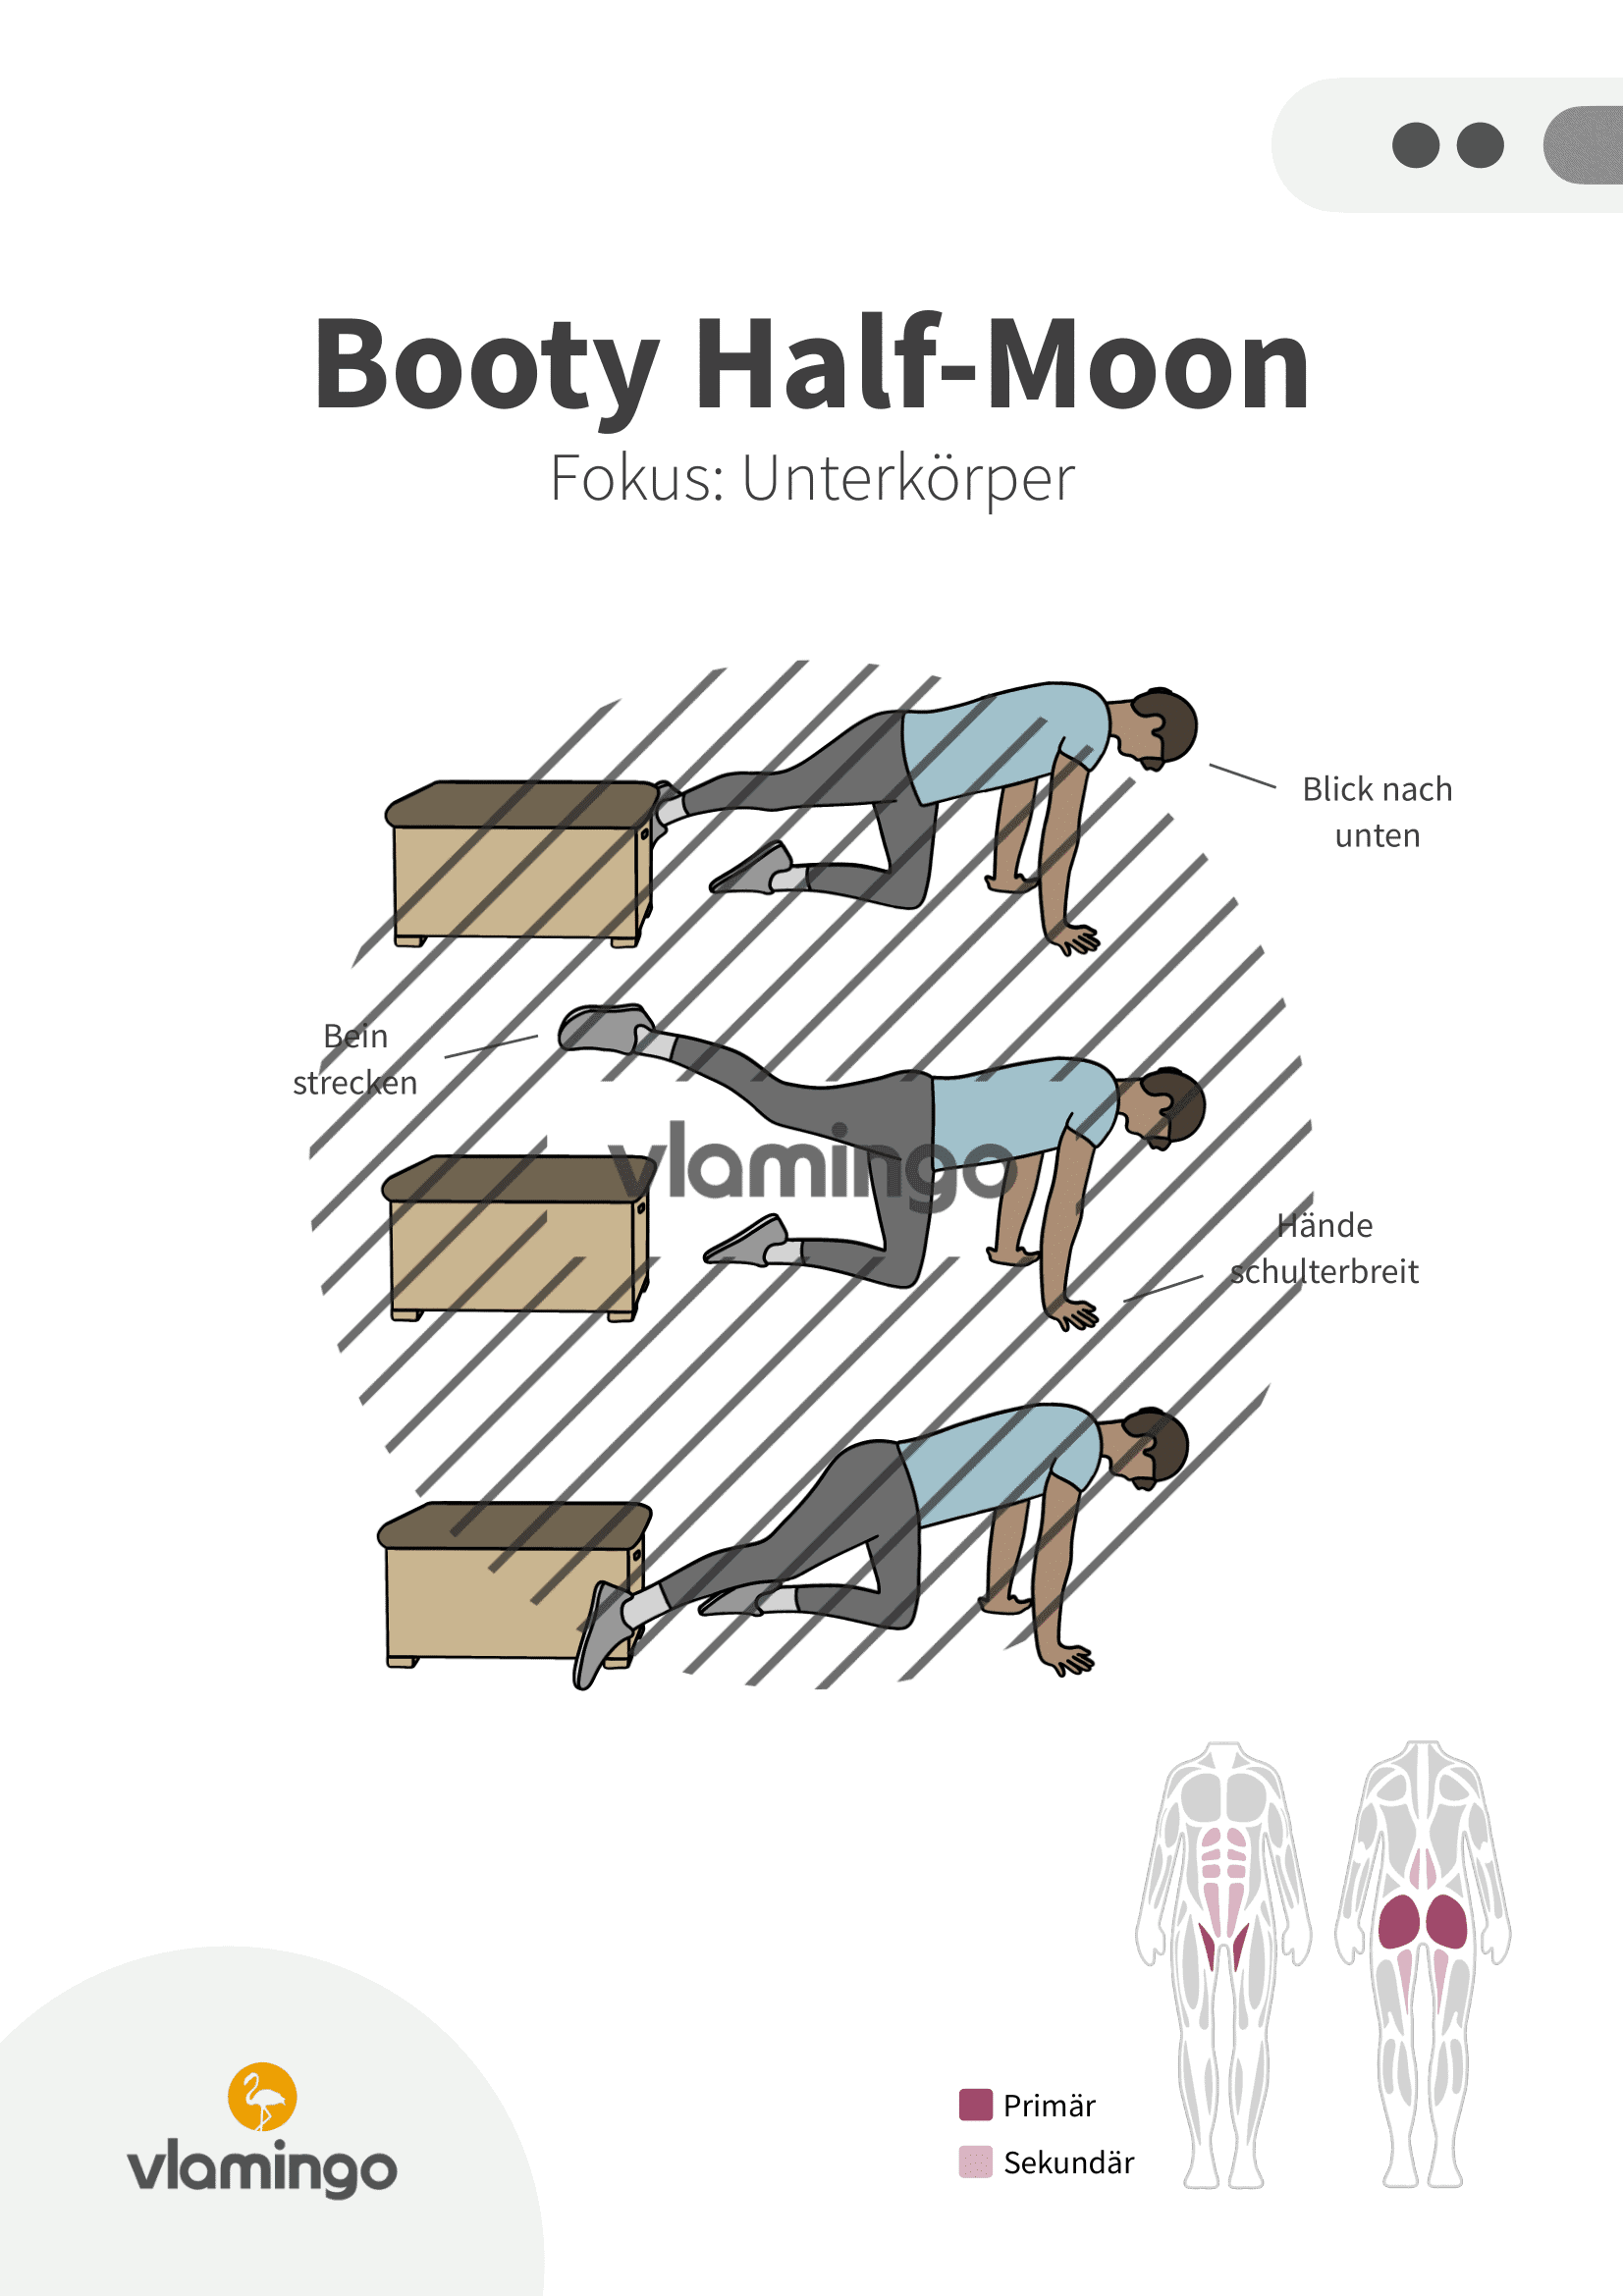 Übung - Booty Half-Moon - Fitness mit Kasten, Stuhl & Bank